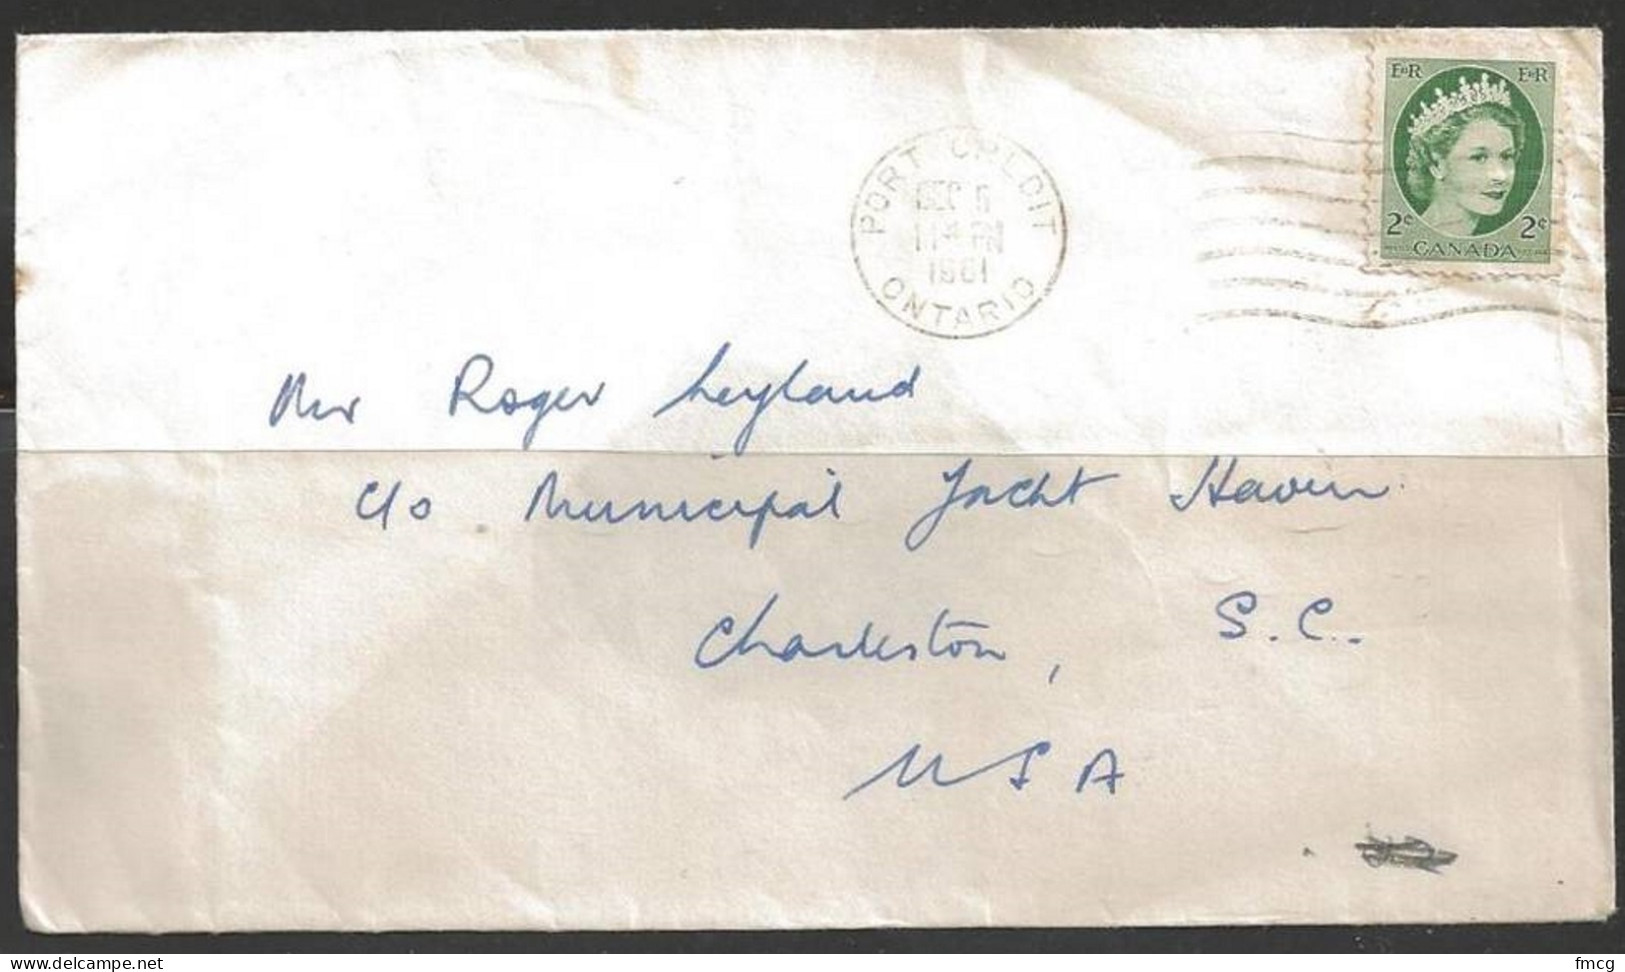 1961 Port Credit Ont (Dec 6) To Charleston SC USA - Storia Postale